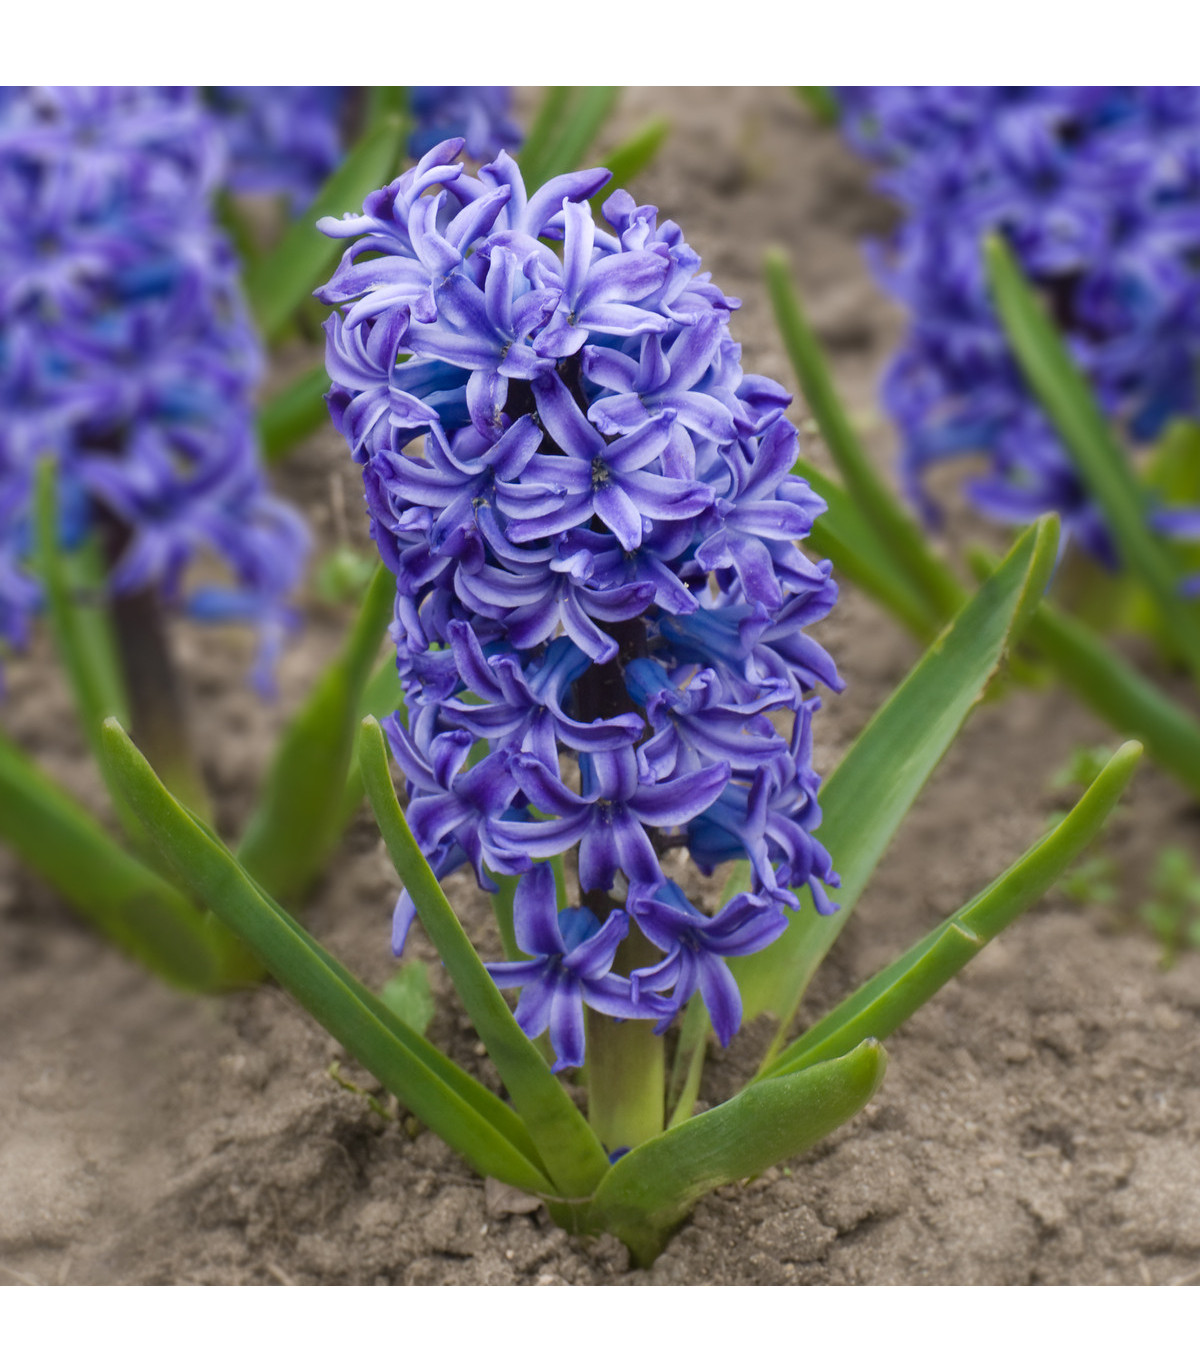 Hyacint modrý Delft Blue - Hyacinthus - cibule hyacintu - 1 ks